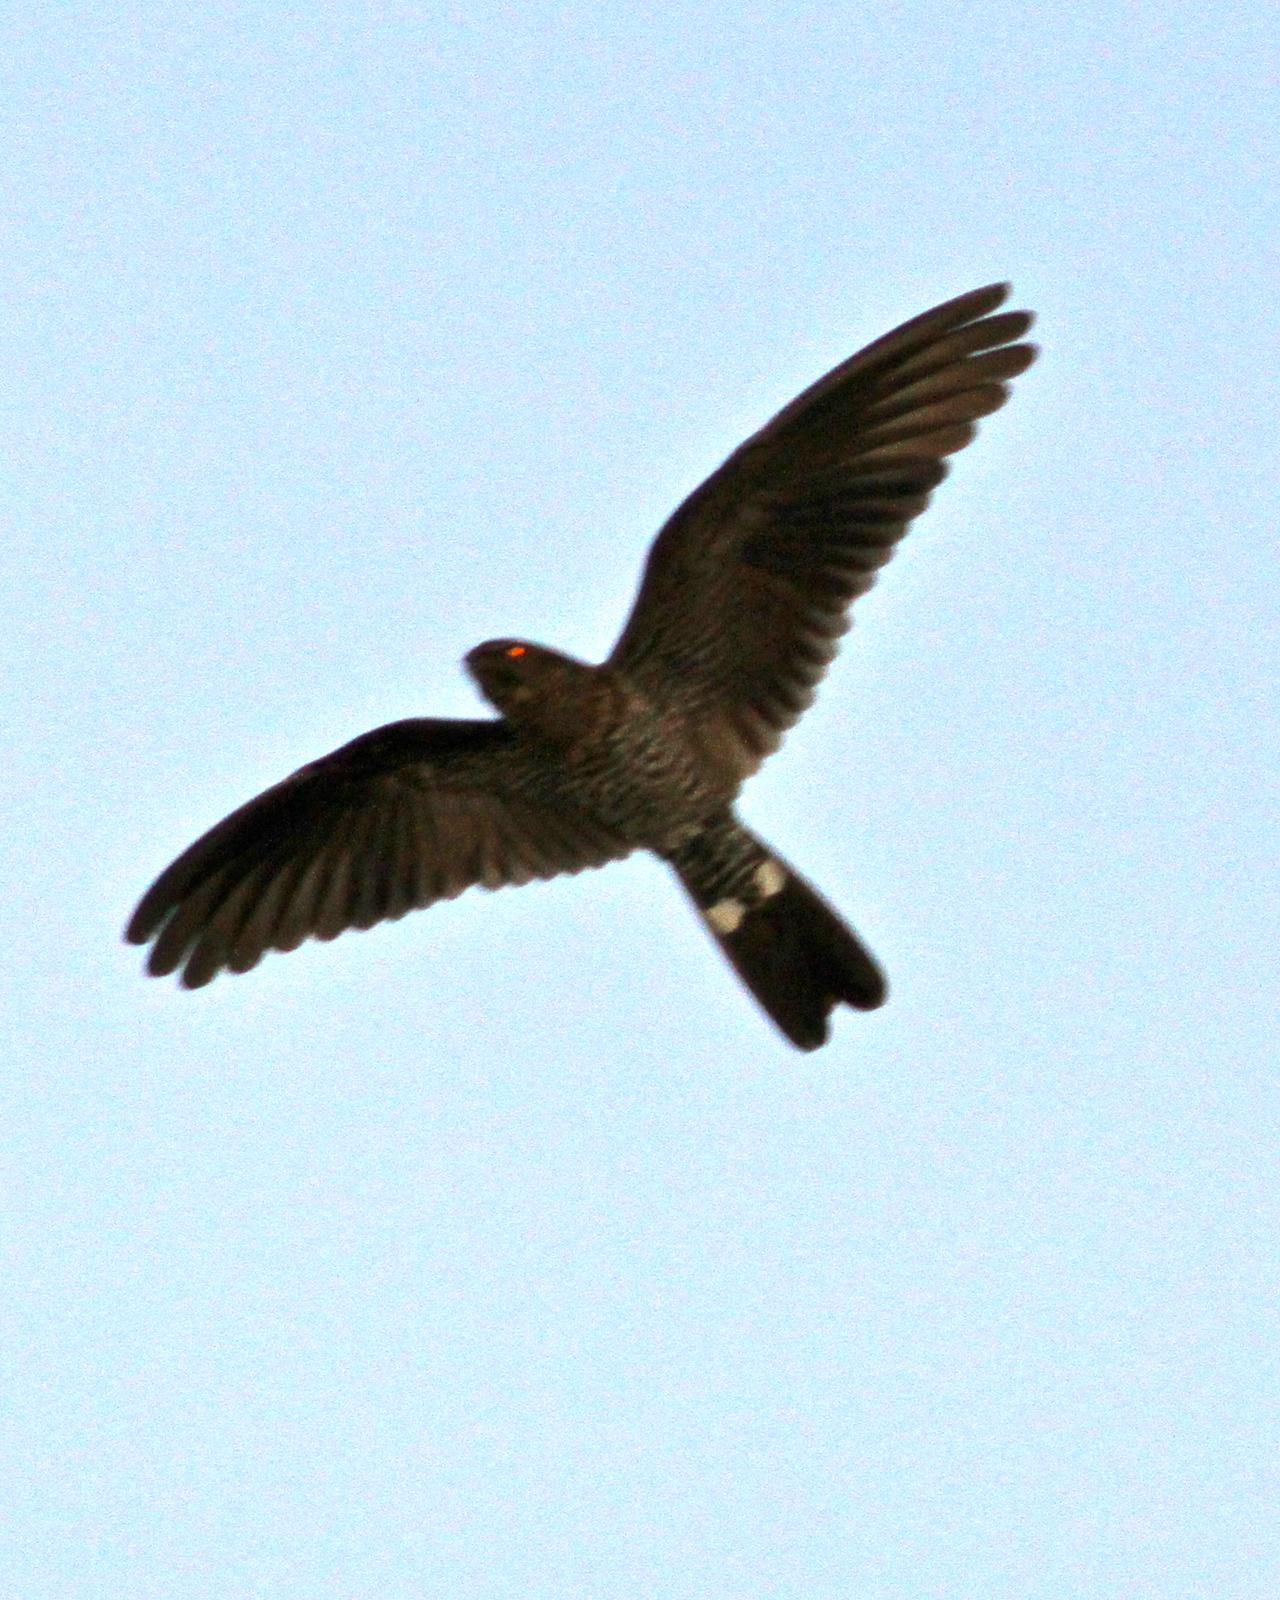 Band-tailed Nighthawk Photo by Marcelo Padua